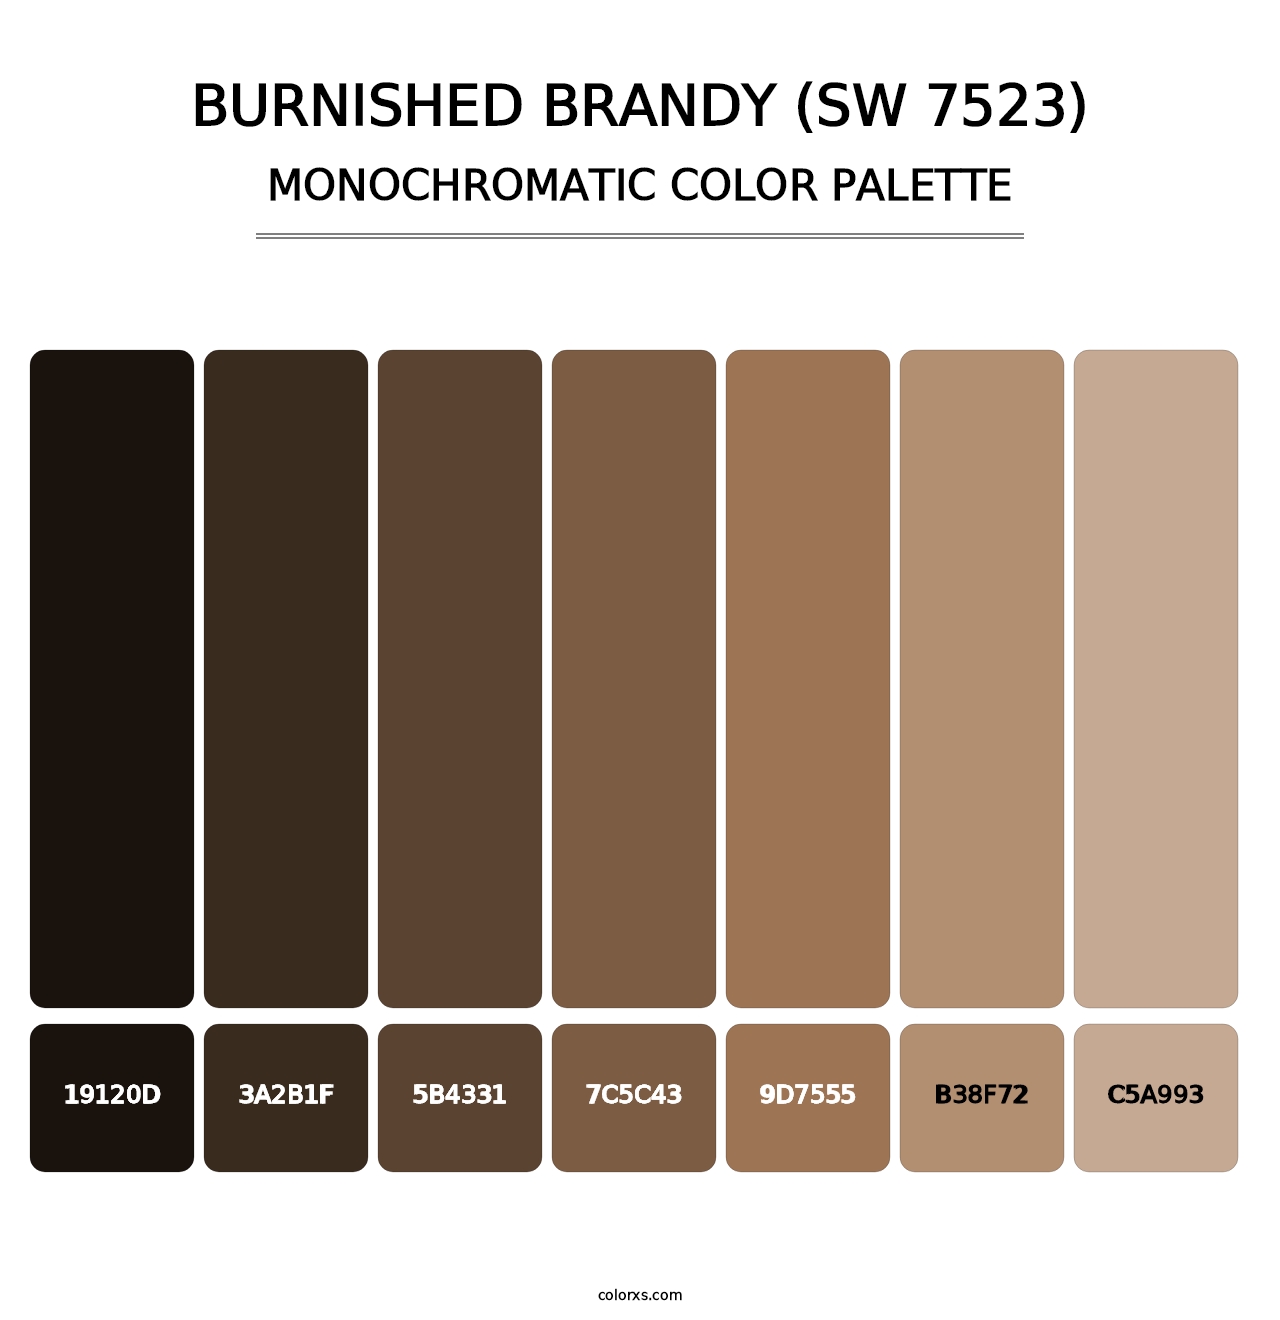 Burnished Brandy (SW 7523) - Monochromatic Color Palette